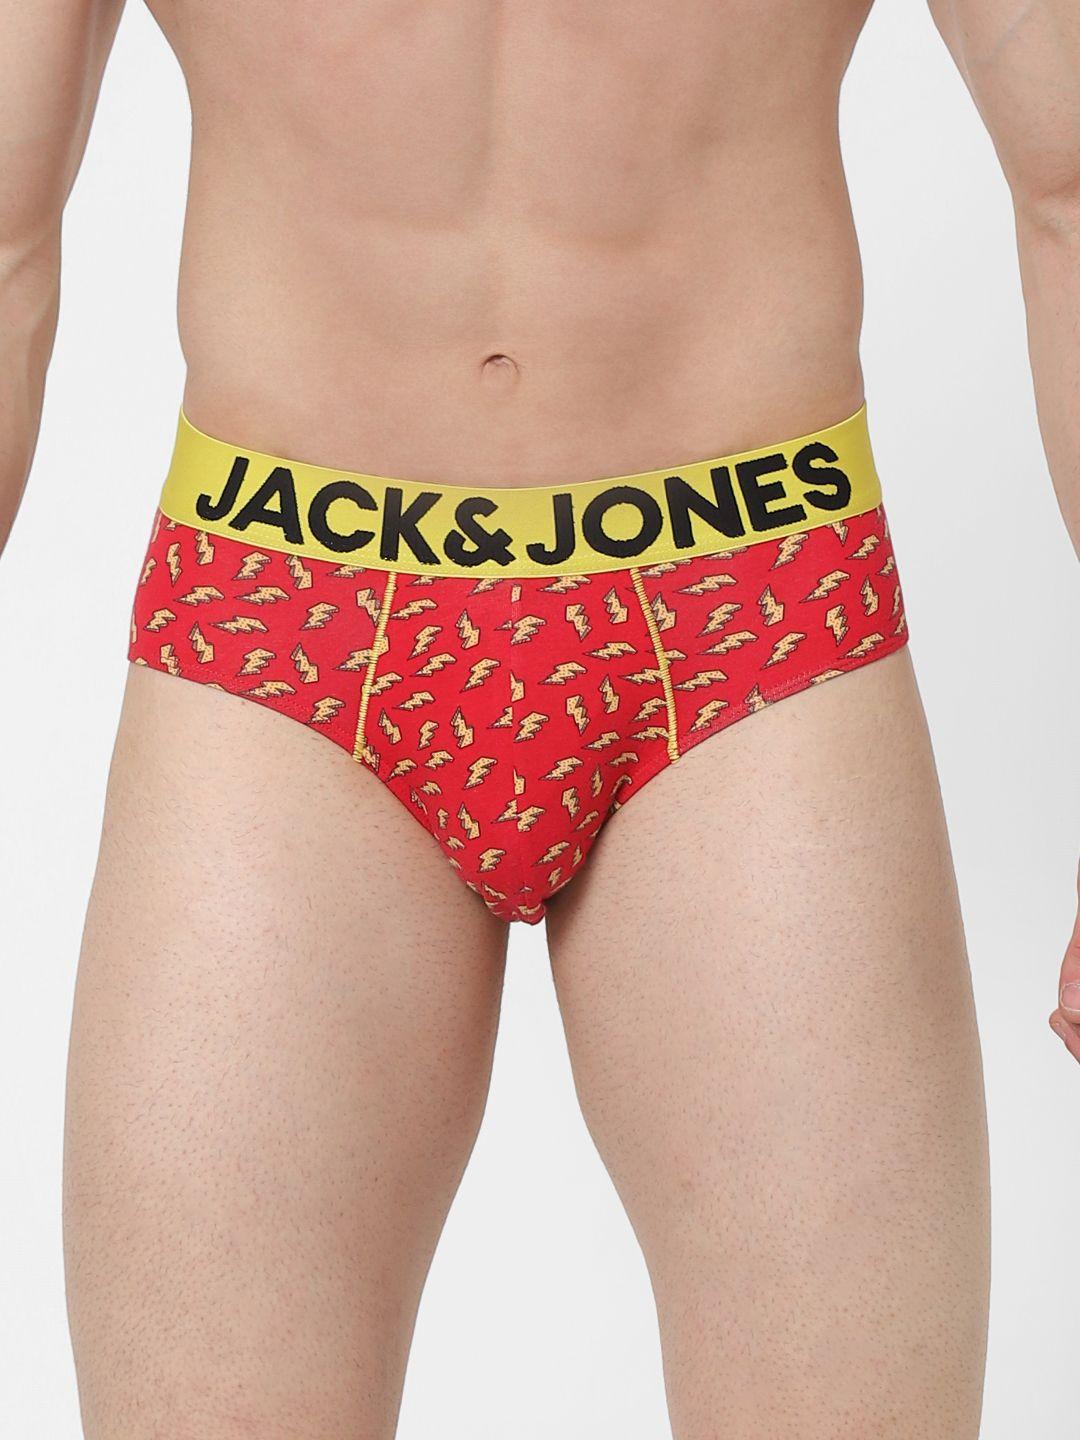 jack-&-jones-men-red-&-yellow-printed-basic-briefs-2288200001